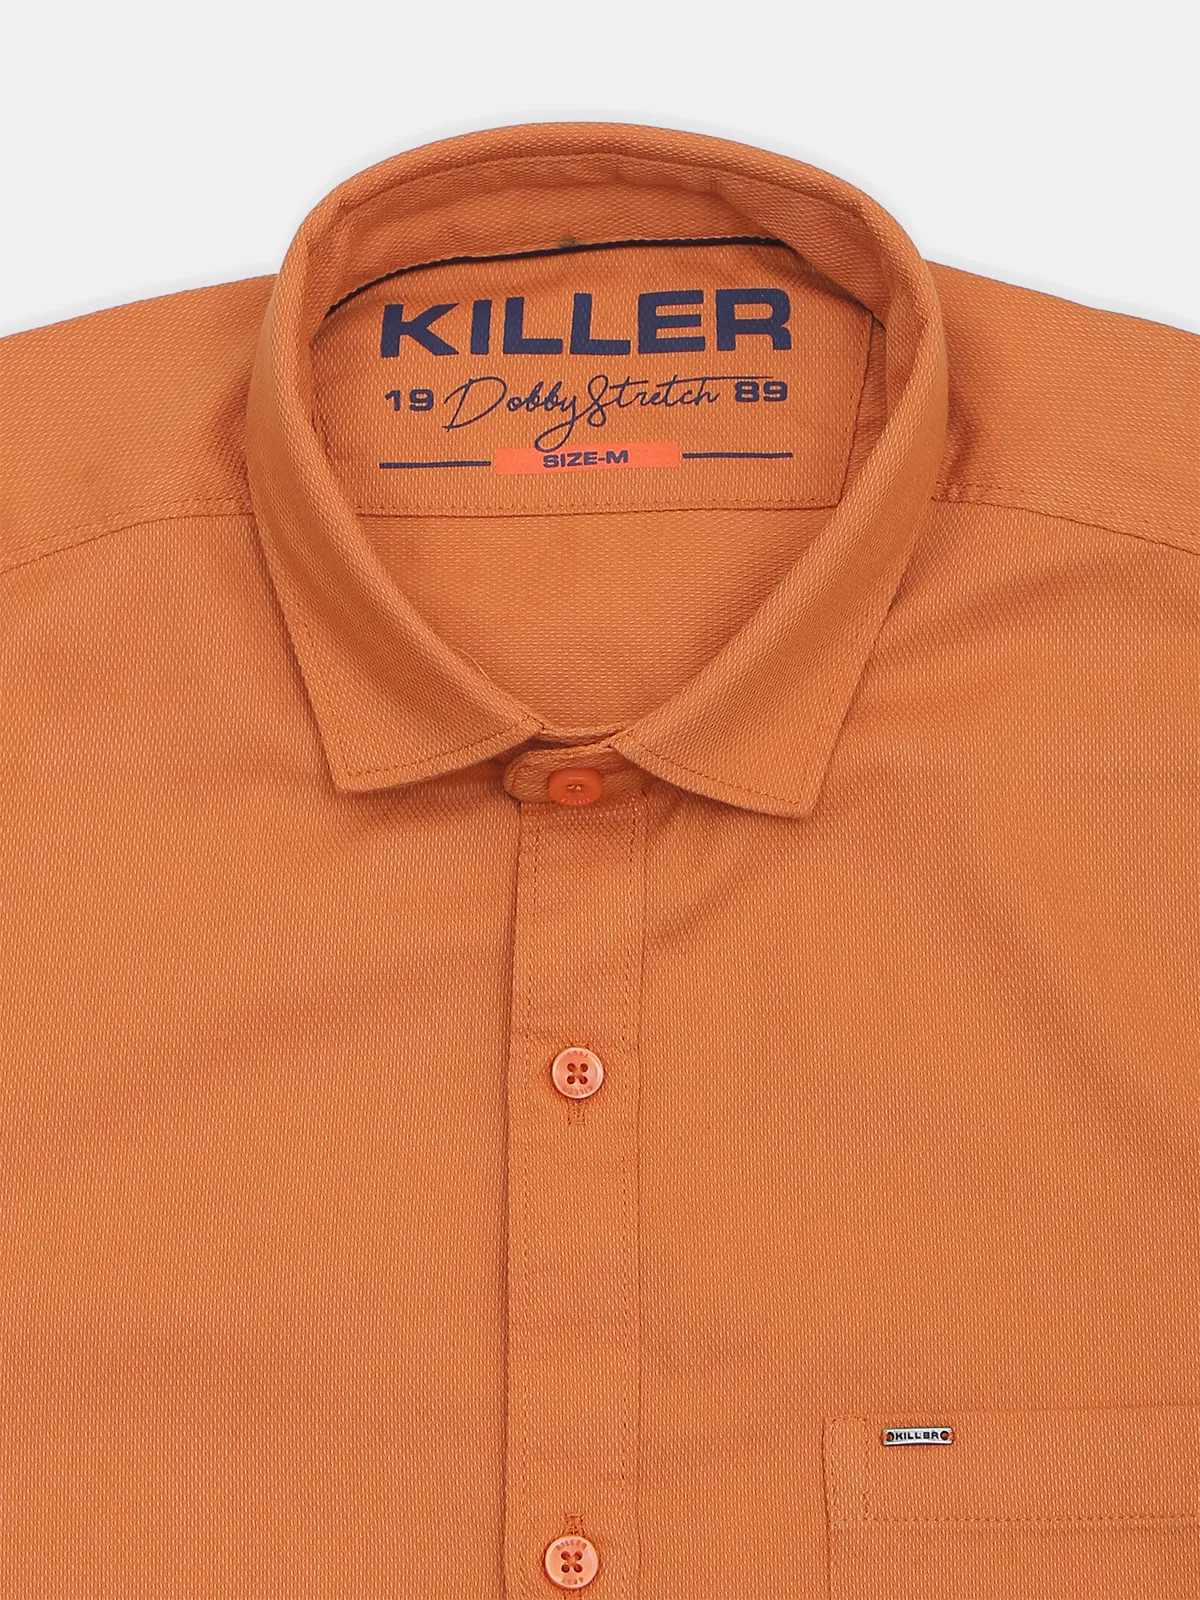 Killer solid rust orange cotton casual wear slim fit shirt